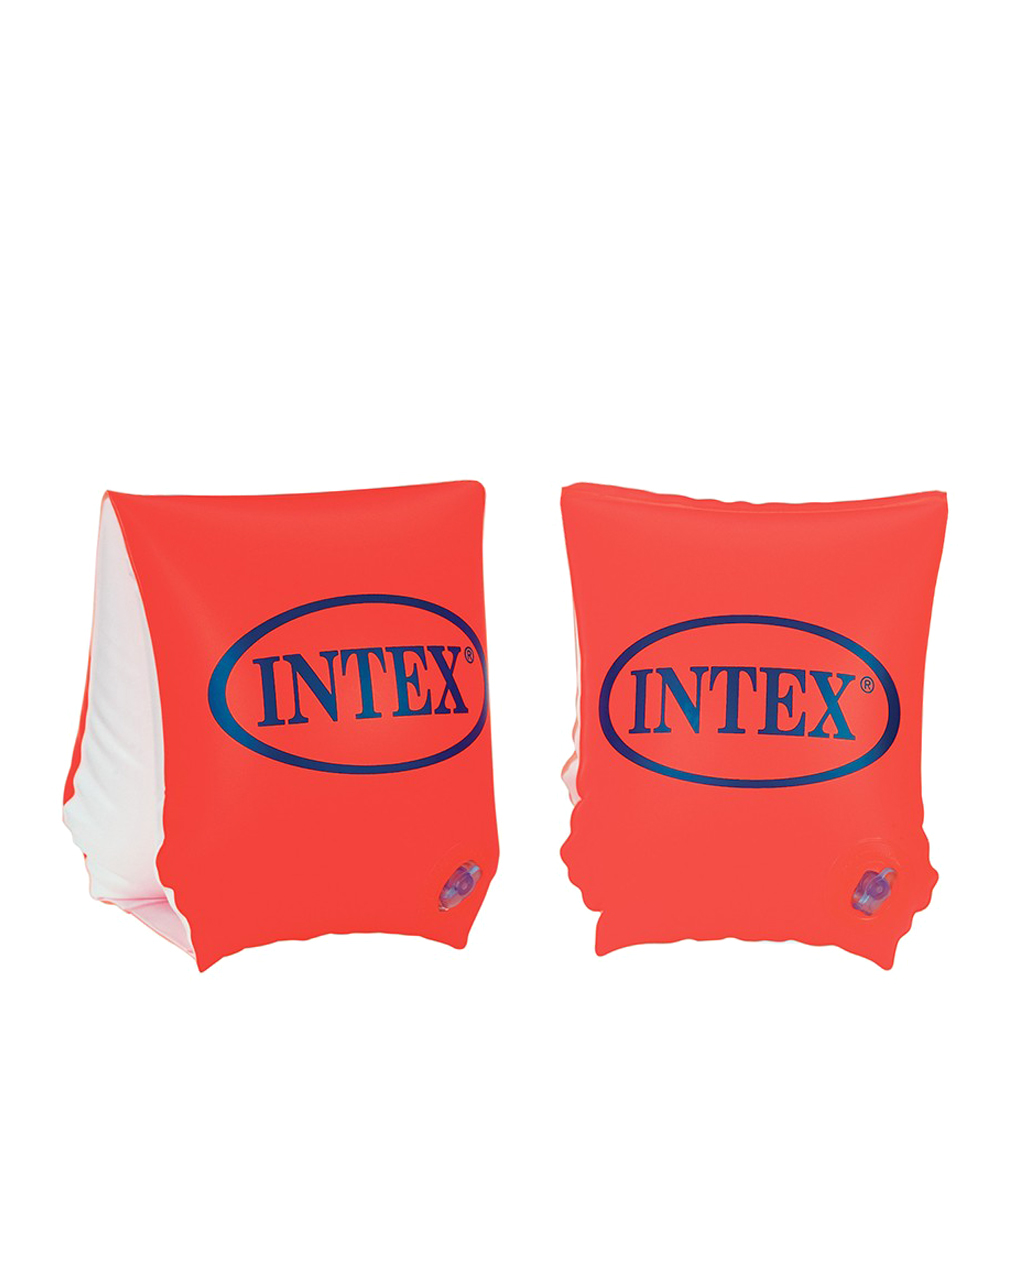 Intex large deluxe arm bands μεγάλα κυλινδρικά κόκκινα μπρατσάκια 0x15 cm - Intex